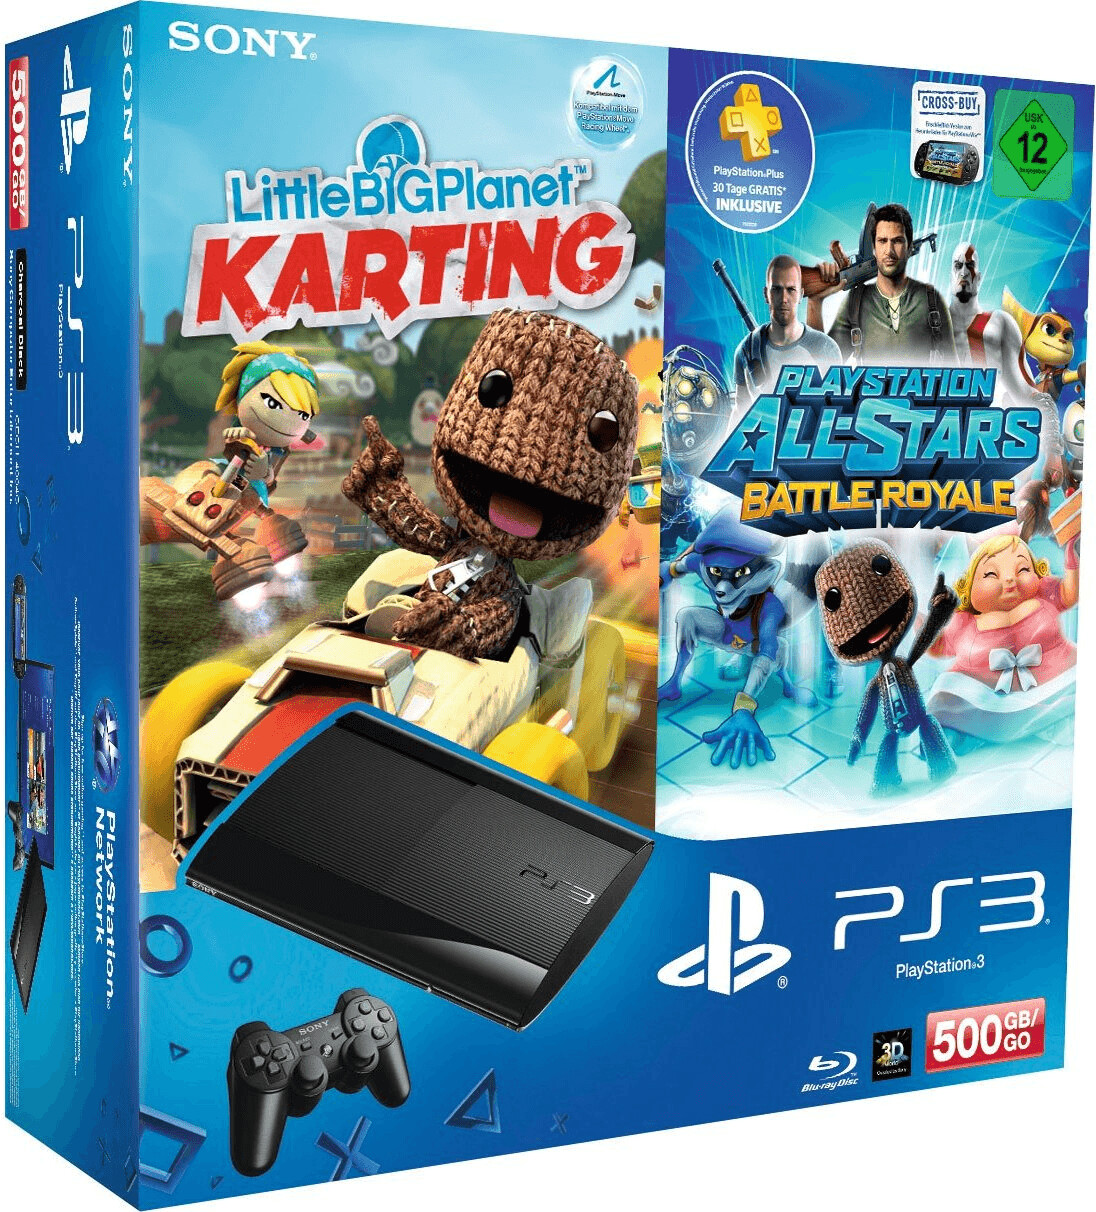 Sony PlayStation 3 (PS3) Super slim 500GB + PlayStation All-Stars: Battle Royale + Little Big Planet: Karting